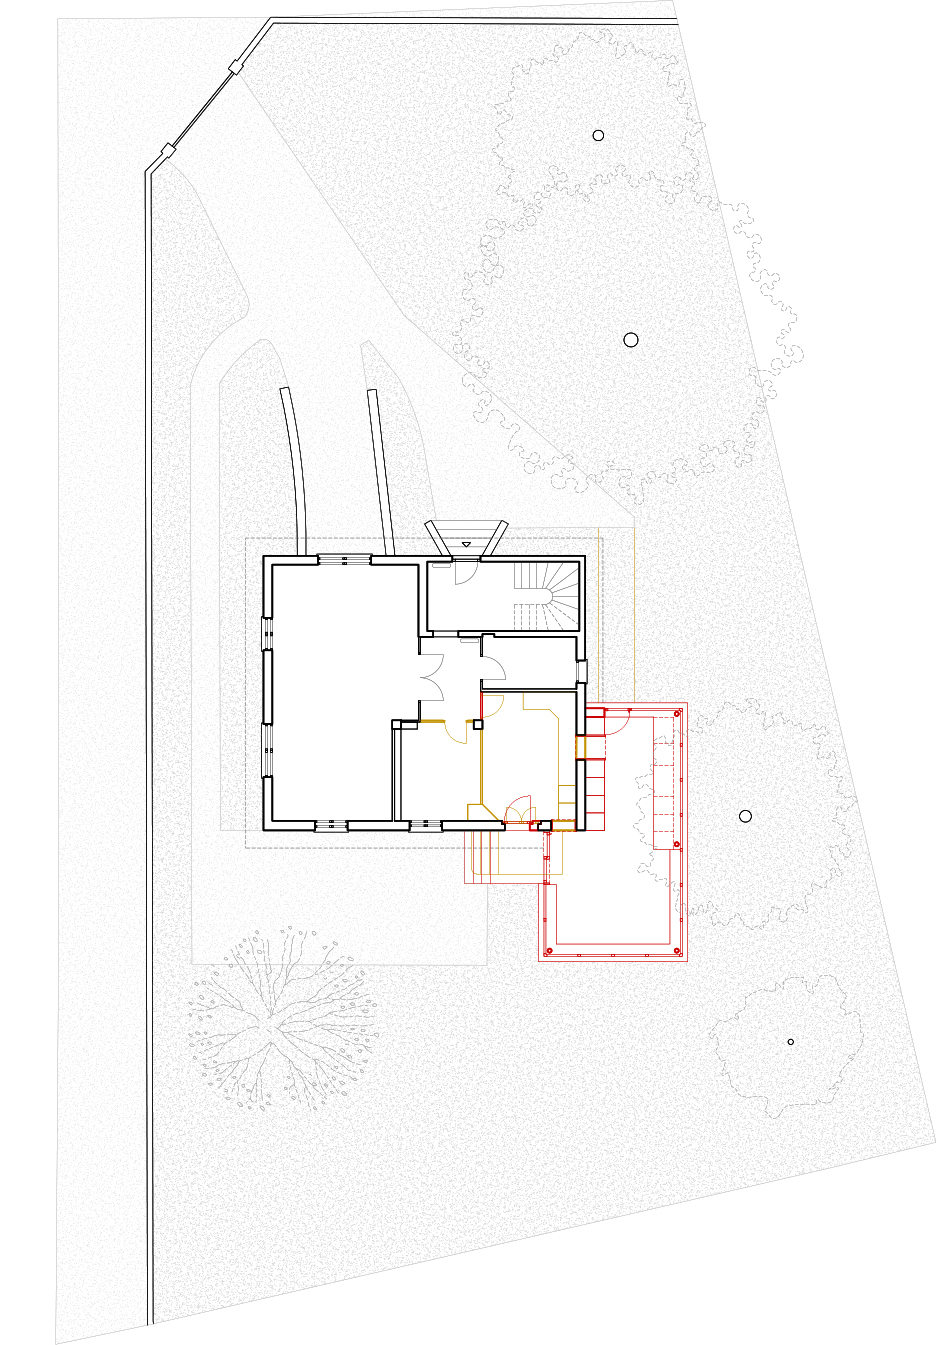 Associati Architectes EPFL SIA Genève. Associati sàrl, Christophe Alhanko, Loris Guillard, Mikaël Sachs. Floor plan